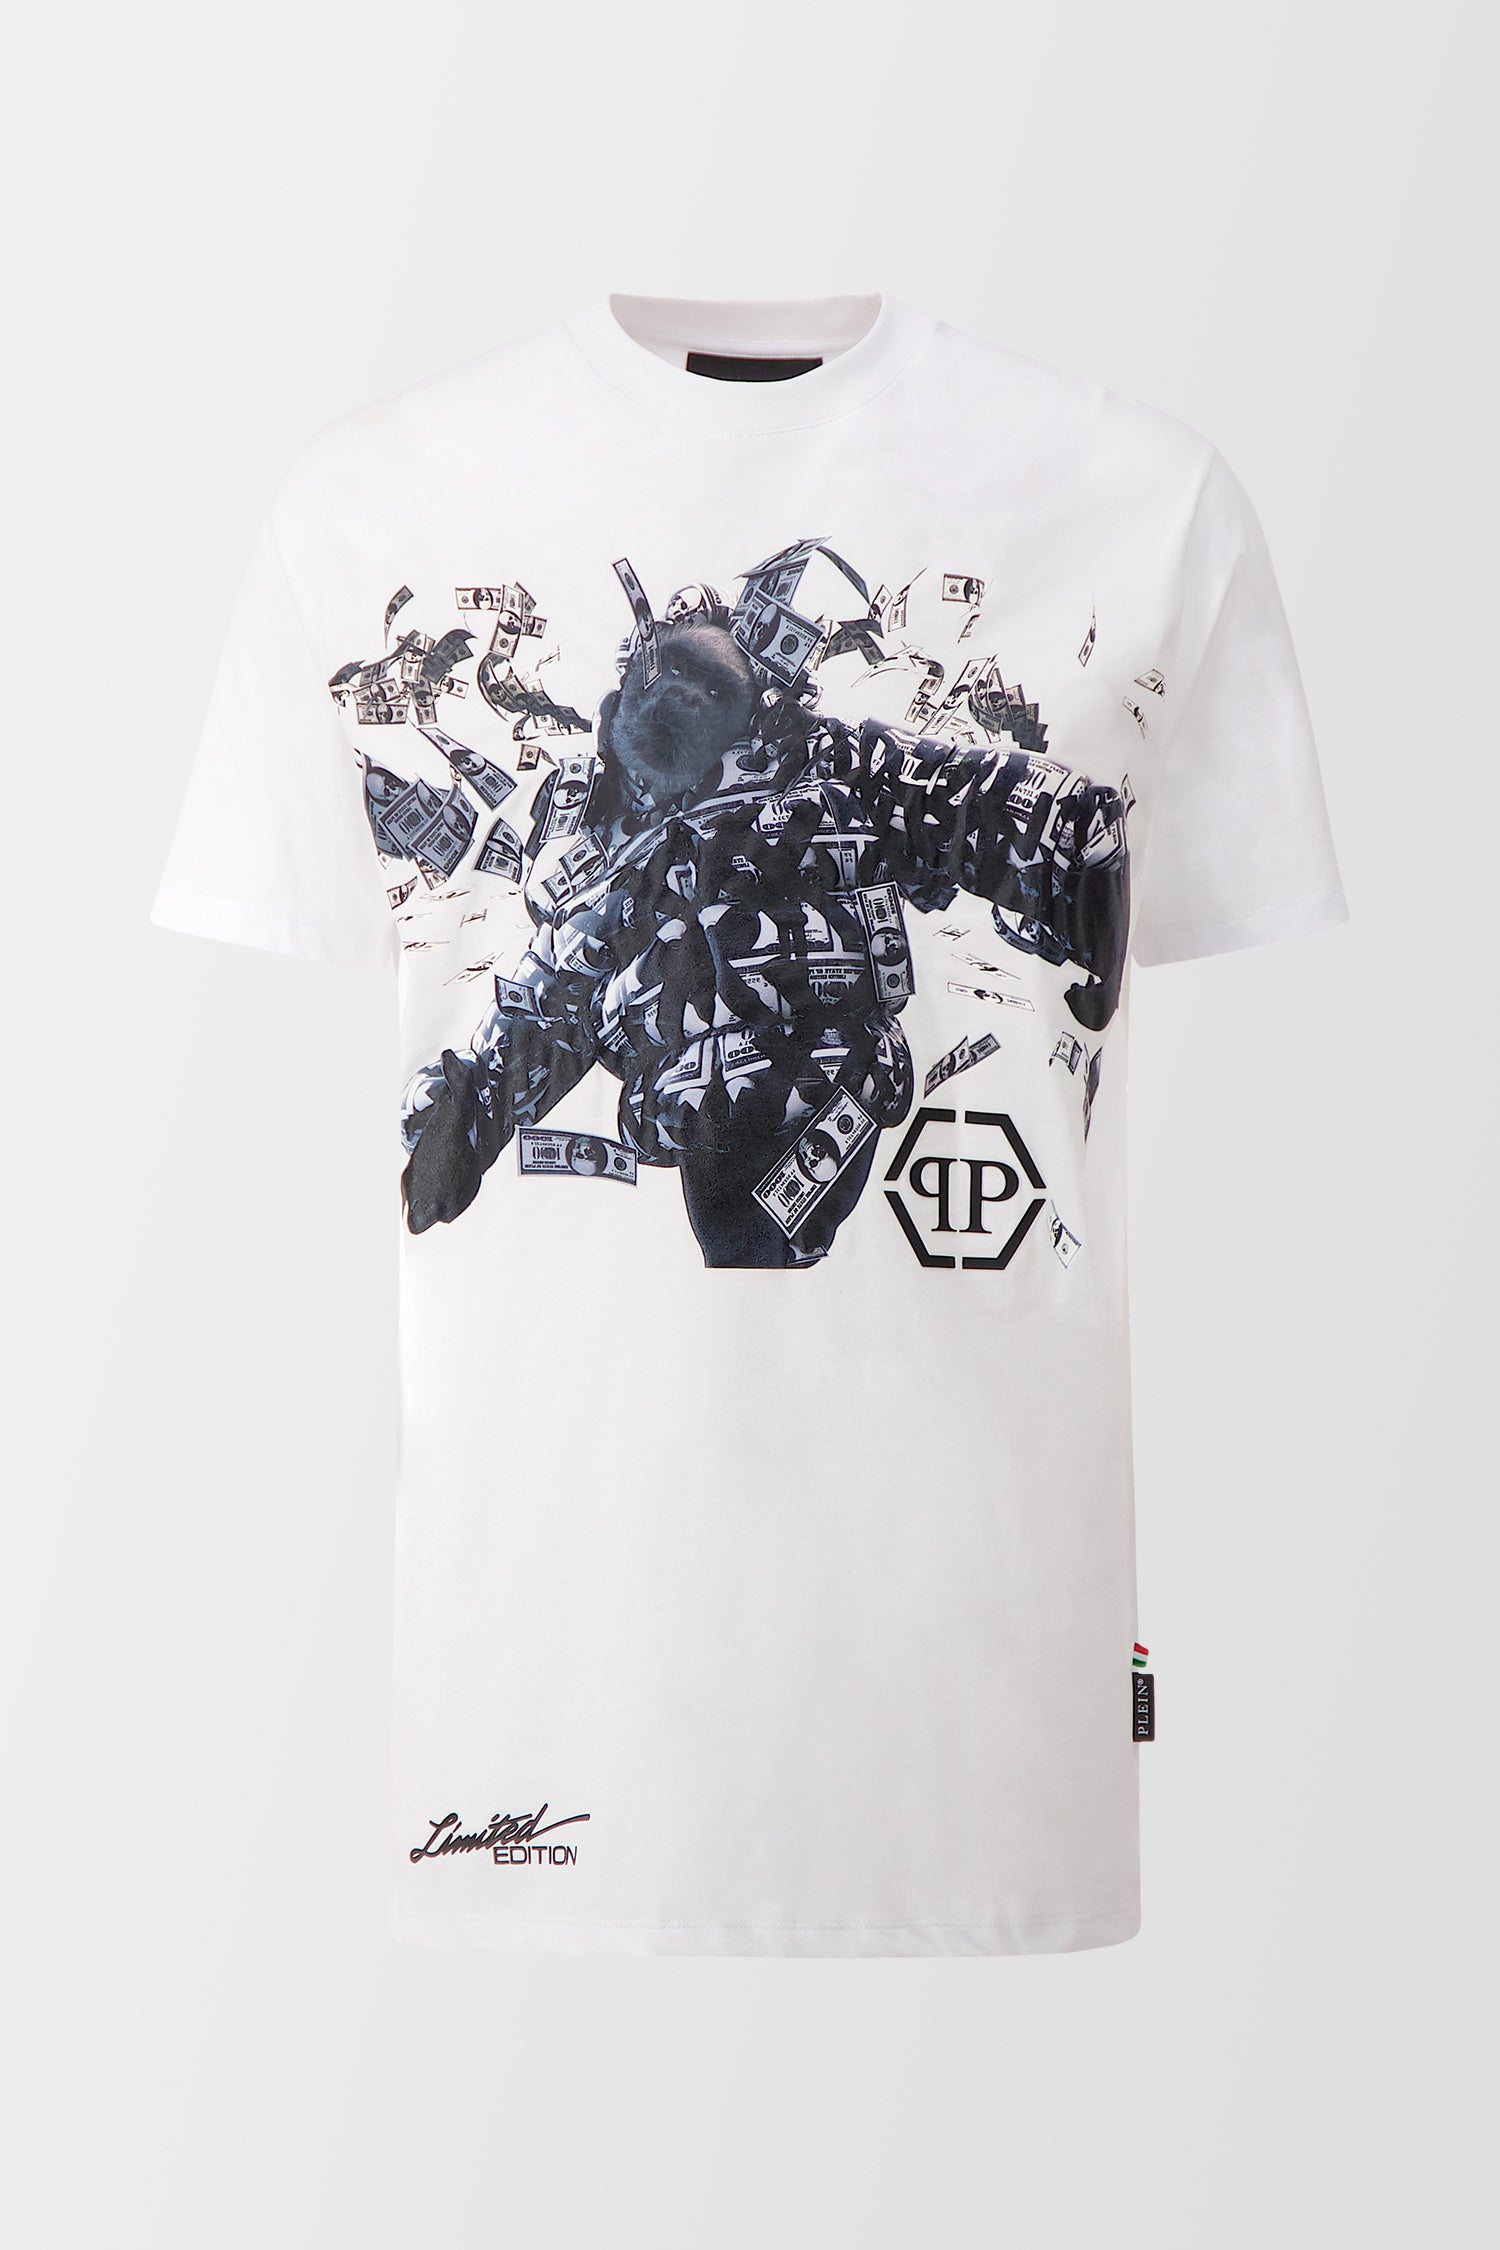 Philipp Plein White Limited Dollar T-Shirt